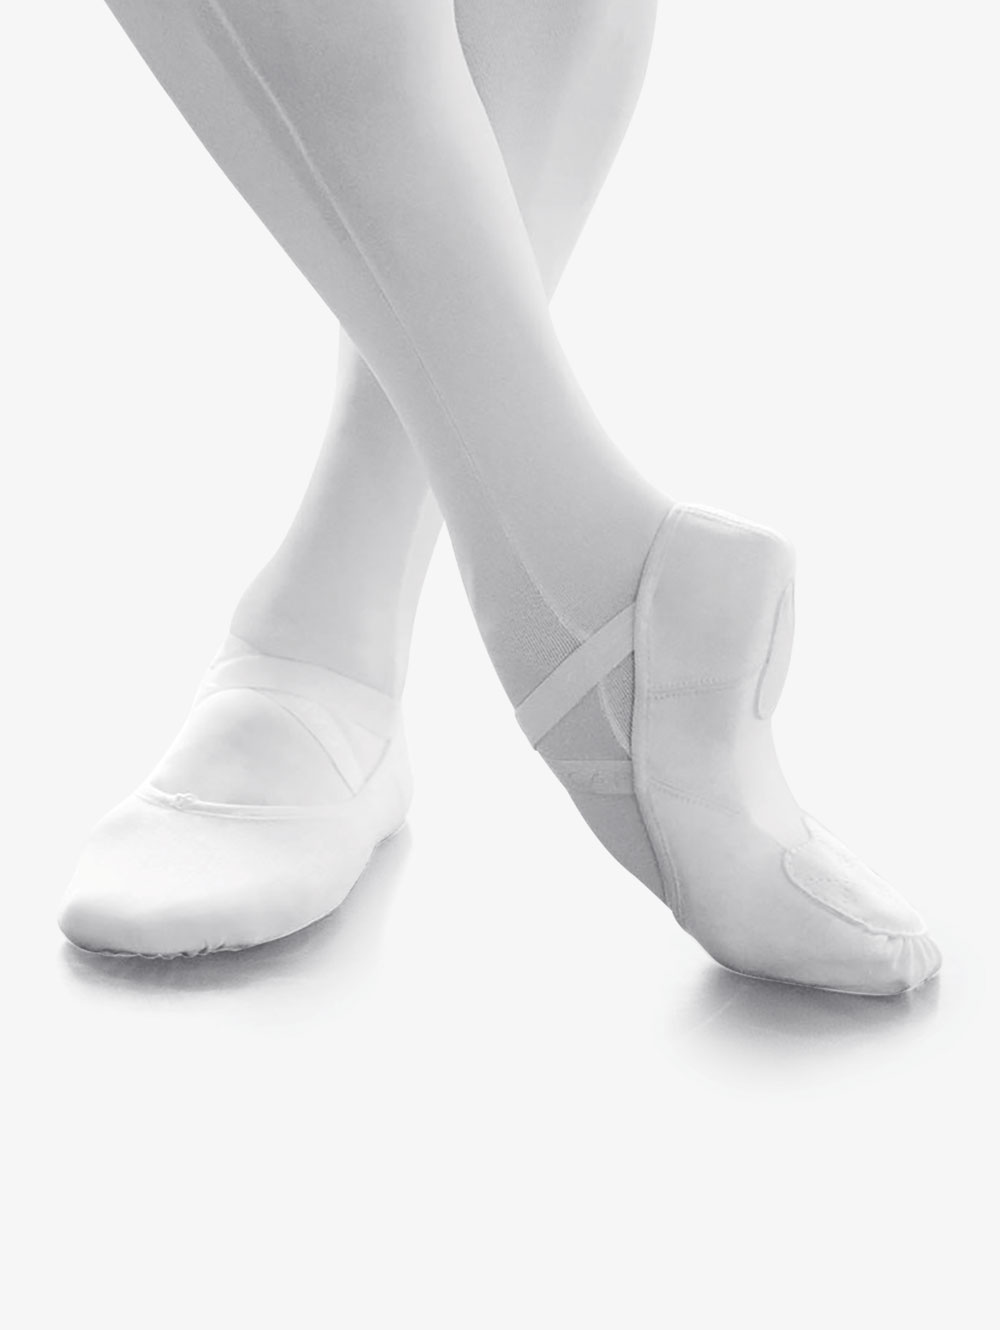 mens white ballet shoes